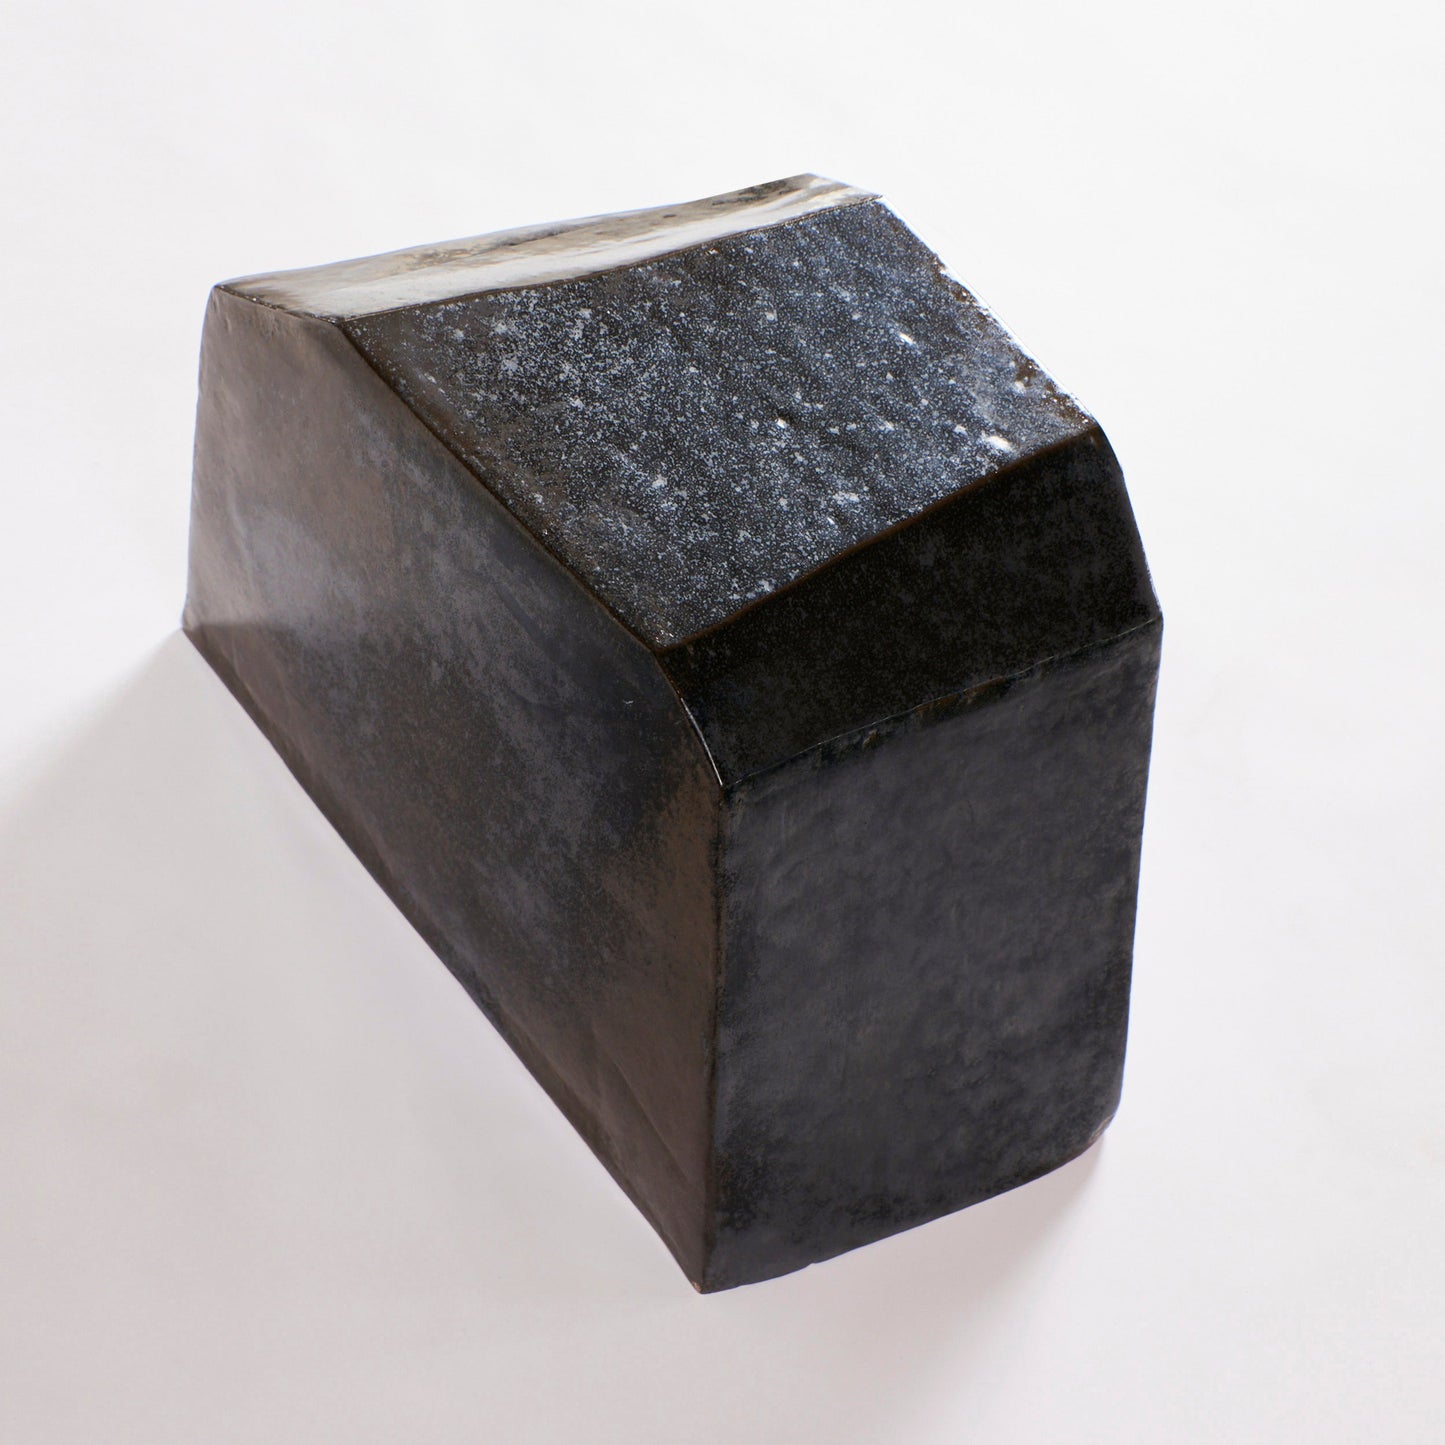 Ceramic Side Table - Small, Geometric Shape